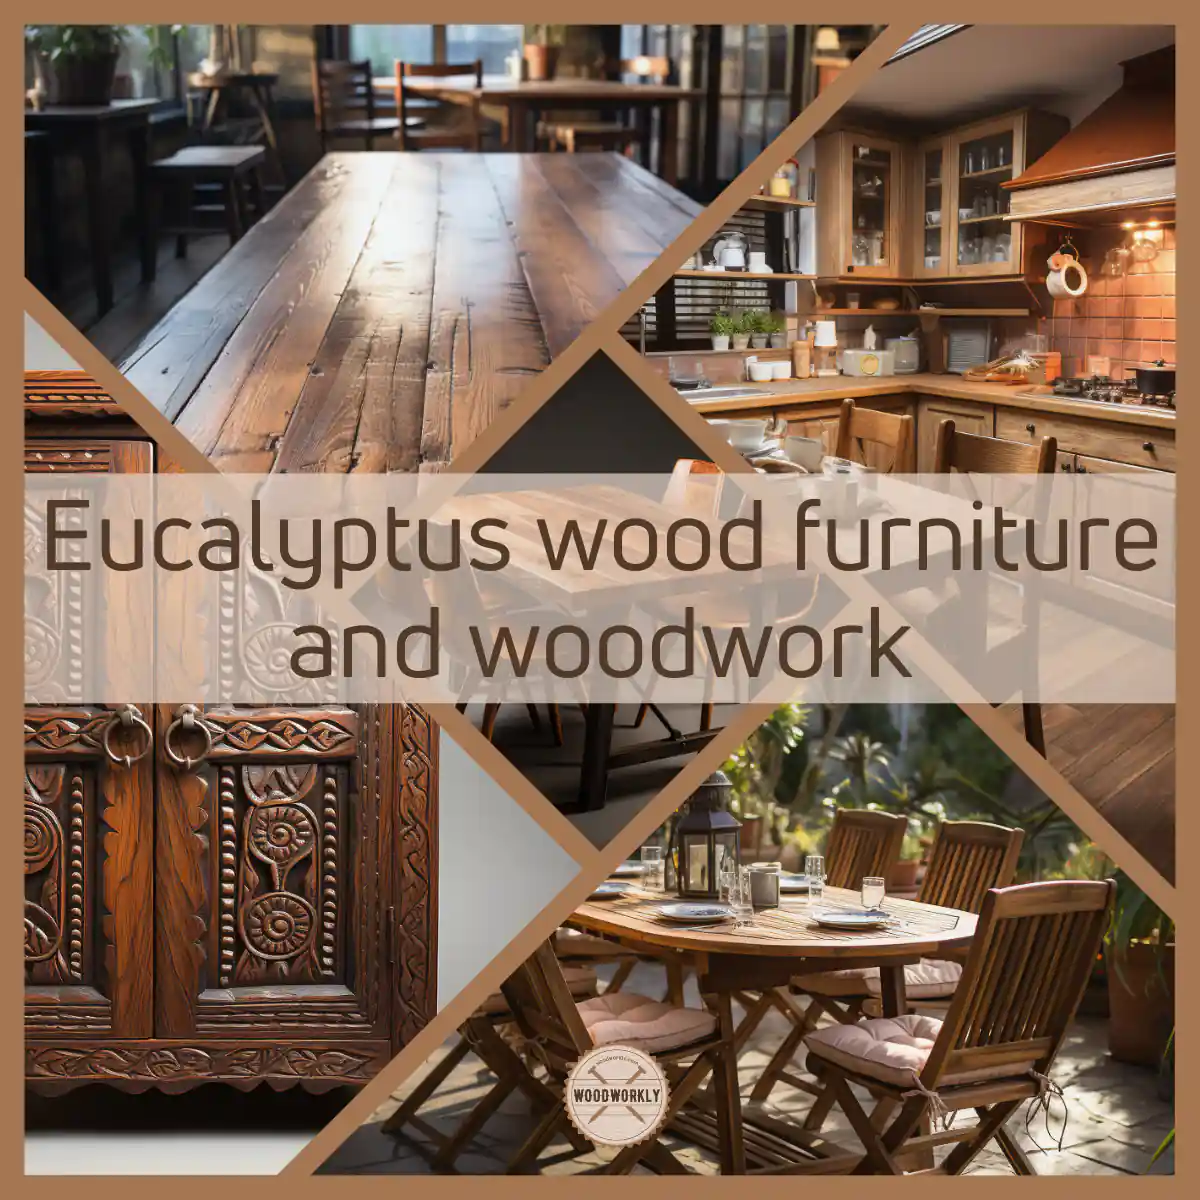 Eucalyptus wood furniture and woodwork